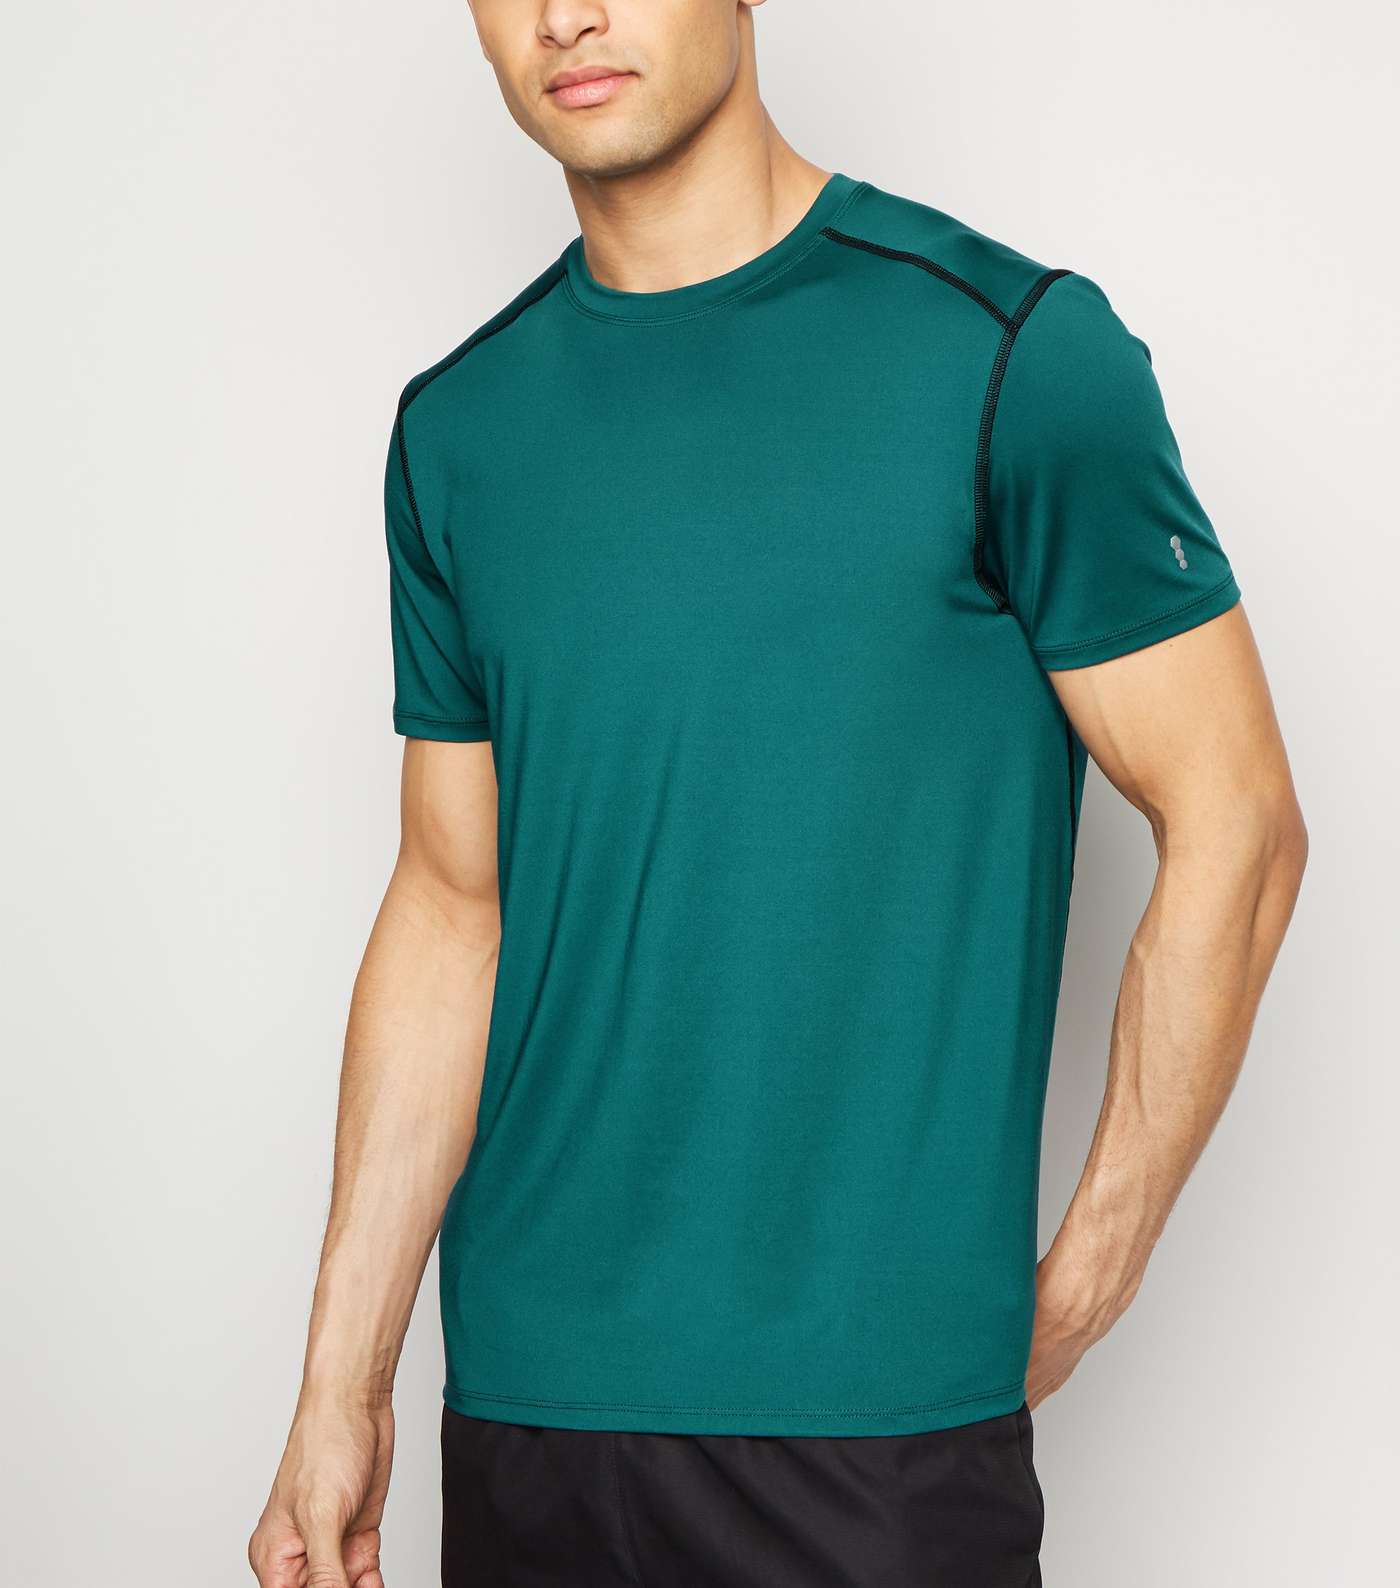 Teal Short Sleeve Sports T-Shirt